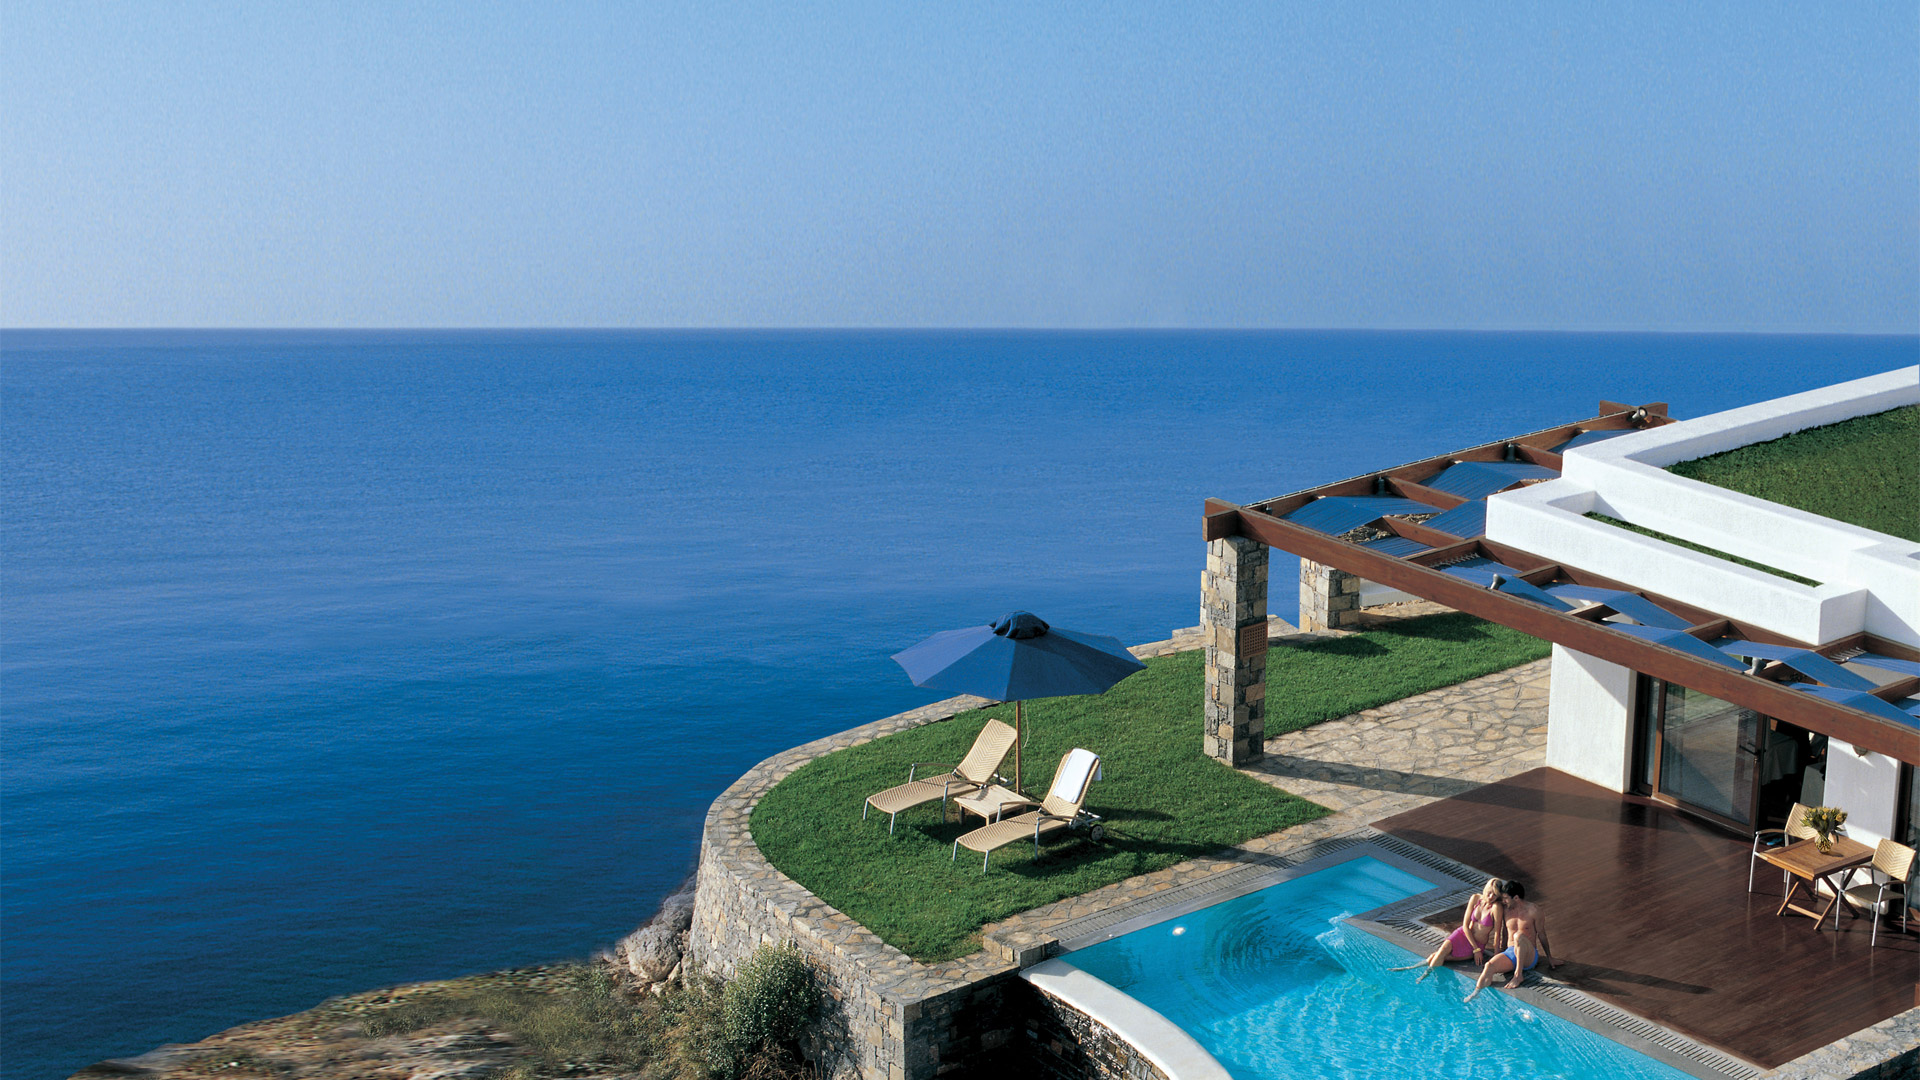 Royal Villa at Grand Resort Lagonissi- Athens, Greece